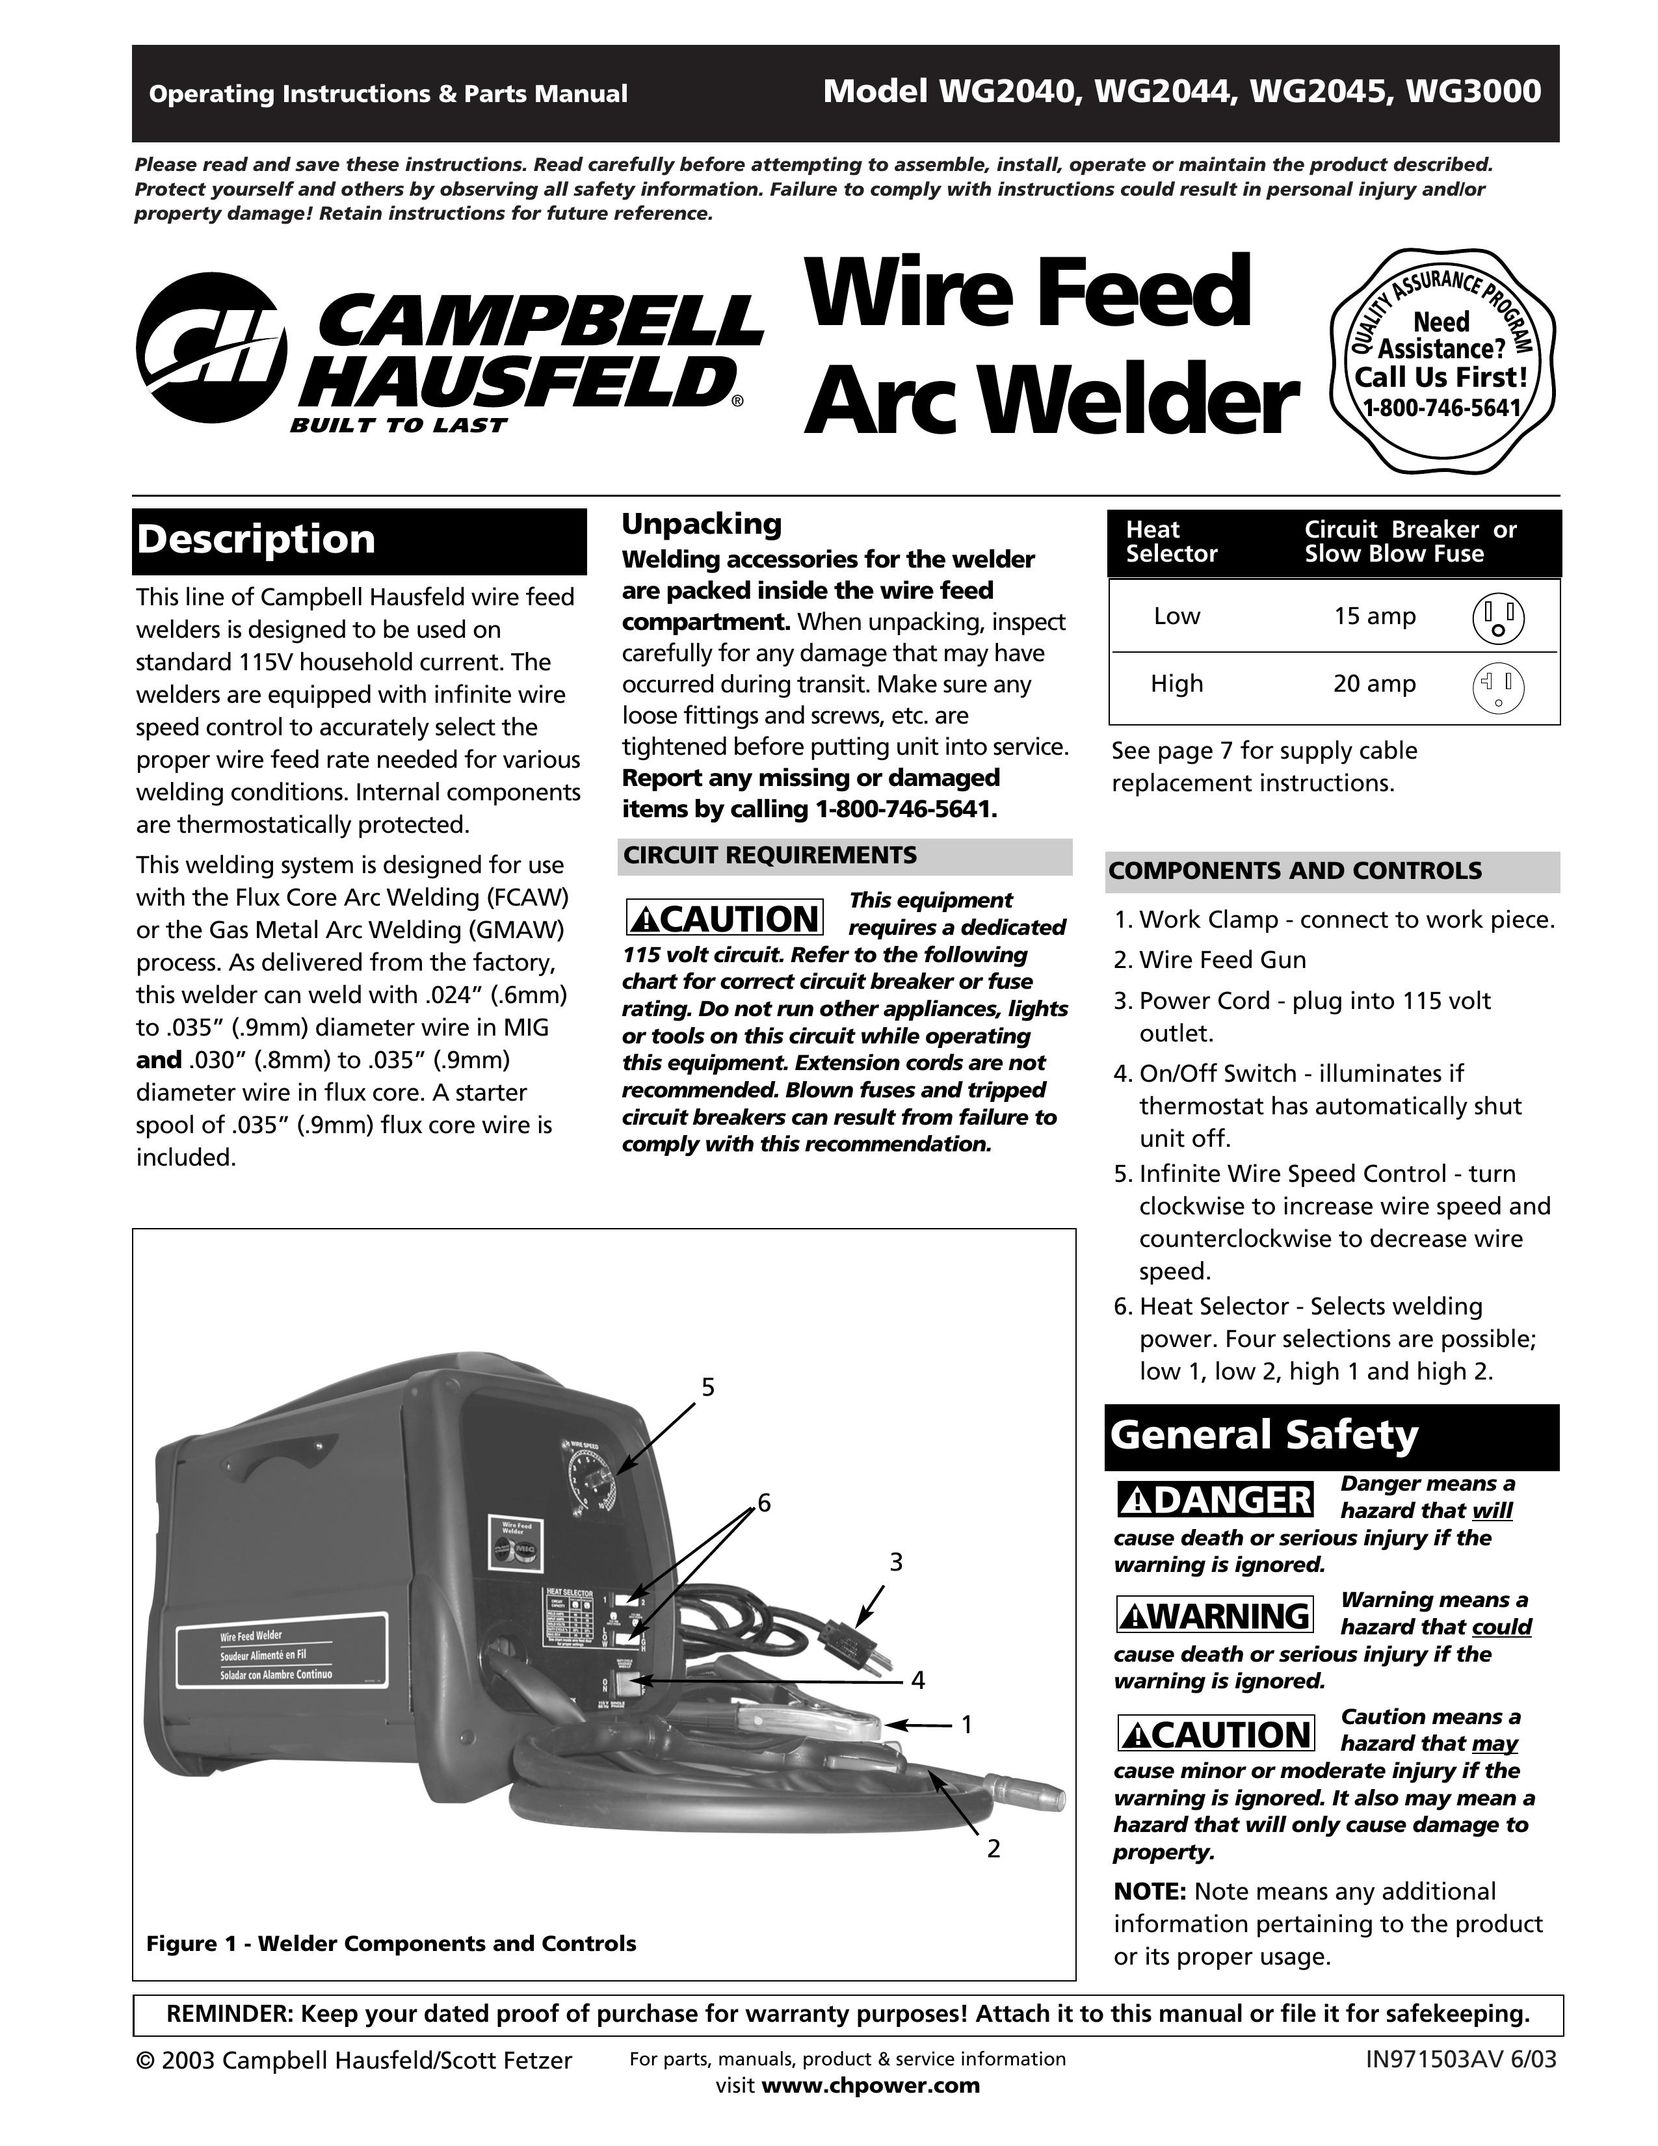 Campbell Hausfeld WG2044 PDAs & Smartphones User Manual